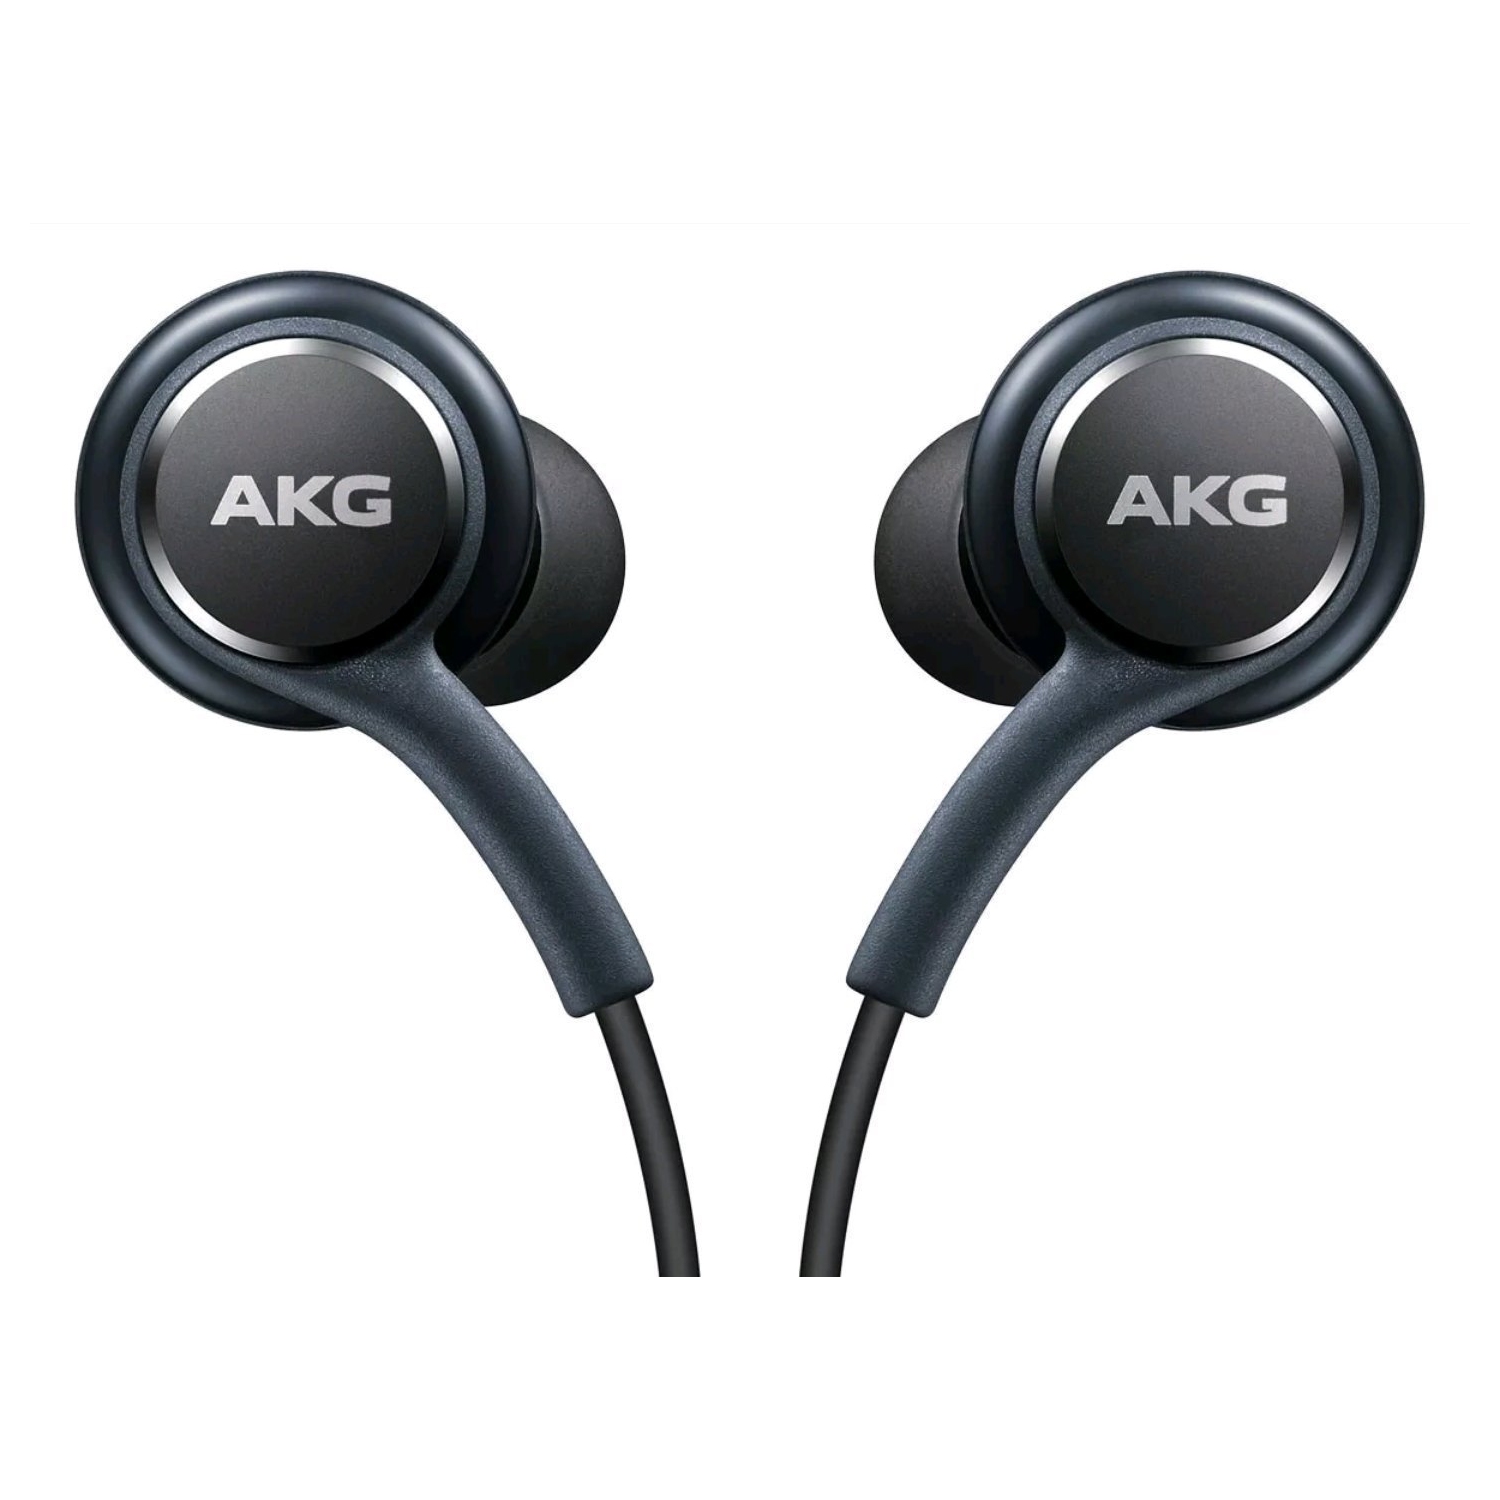 5 Packs - Samsung Galaxy AKG Headphones Headset Earphones EarBuds For Samsung Galaxy S9 S8 S8+ S7 S6 Note 9 8 Black